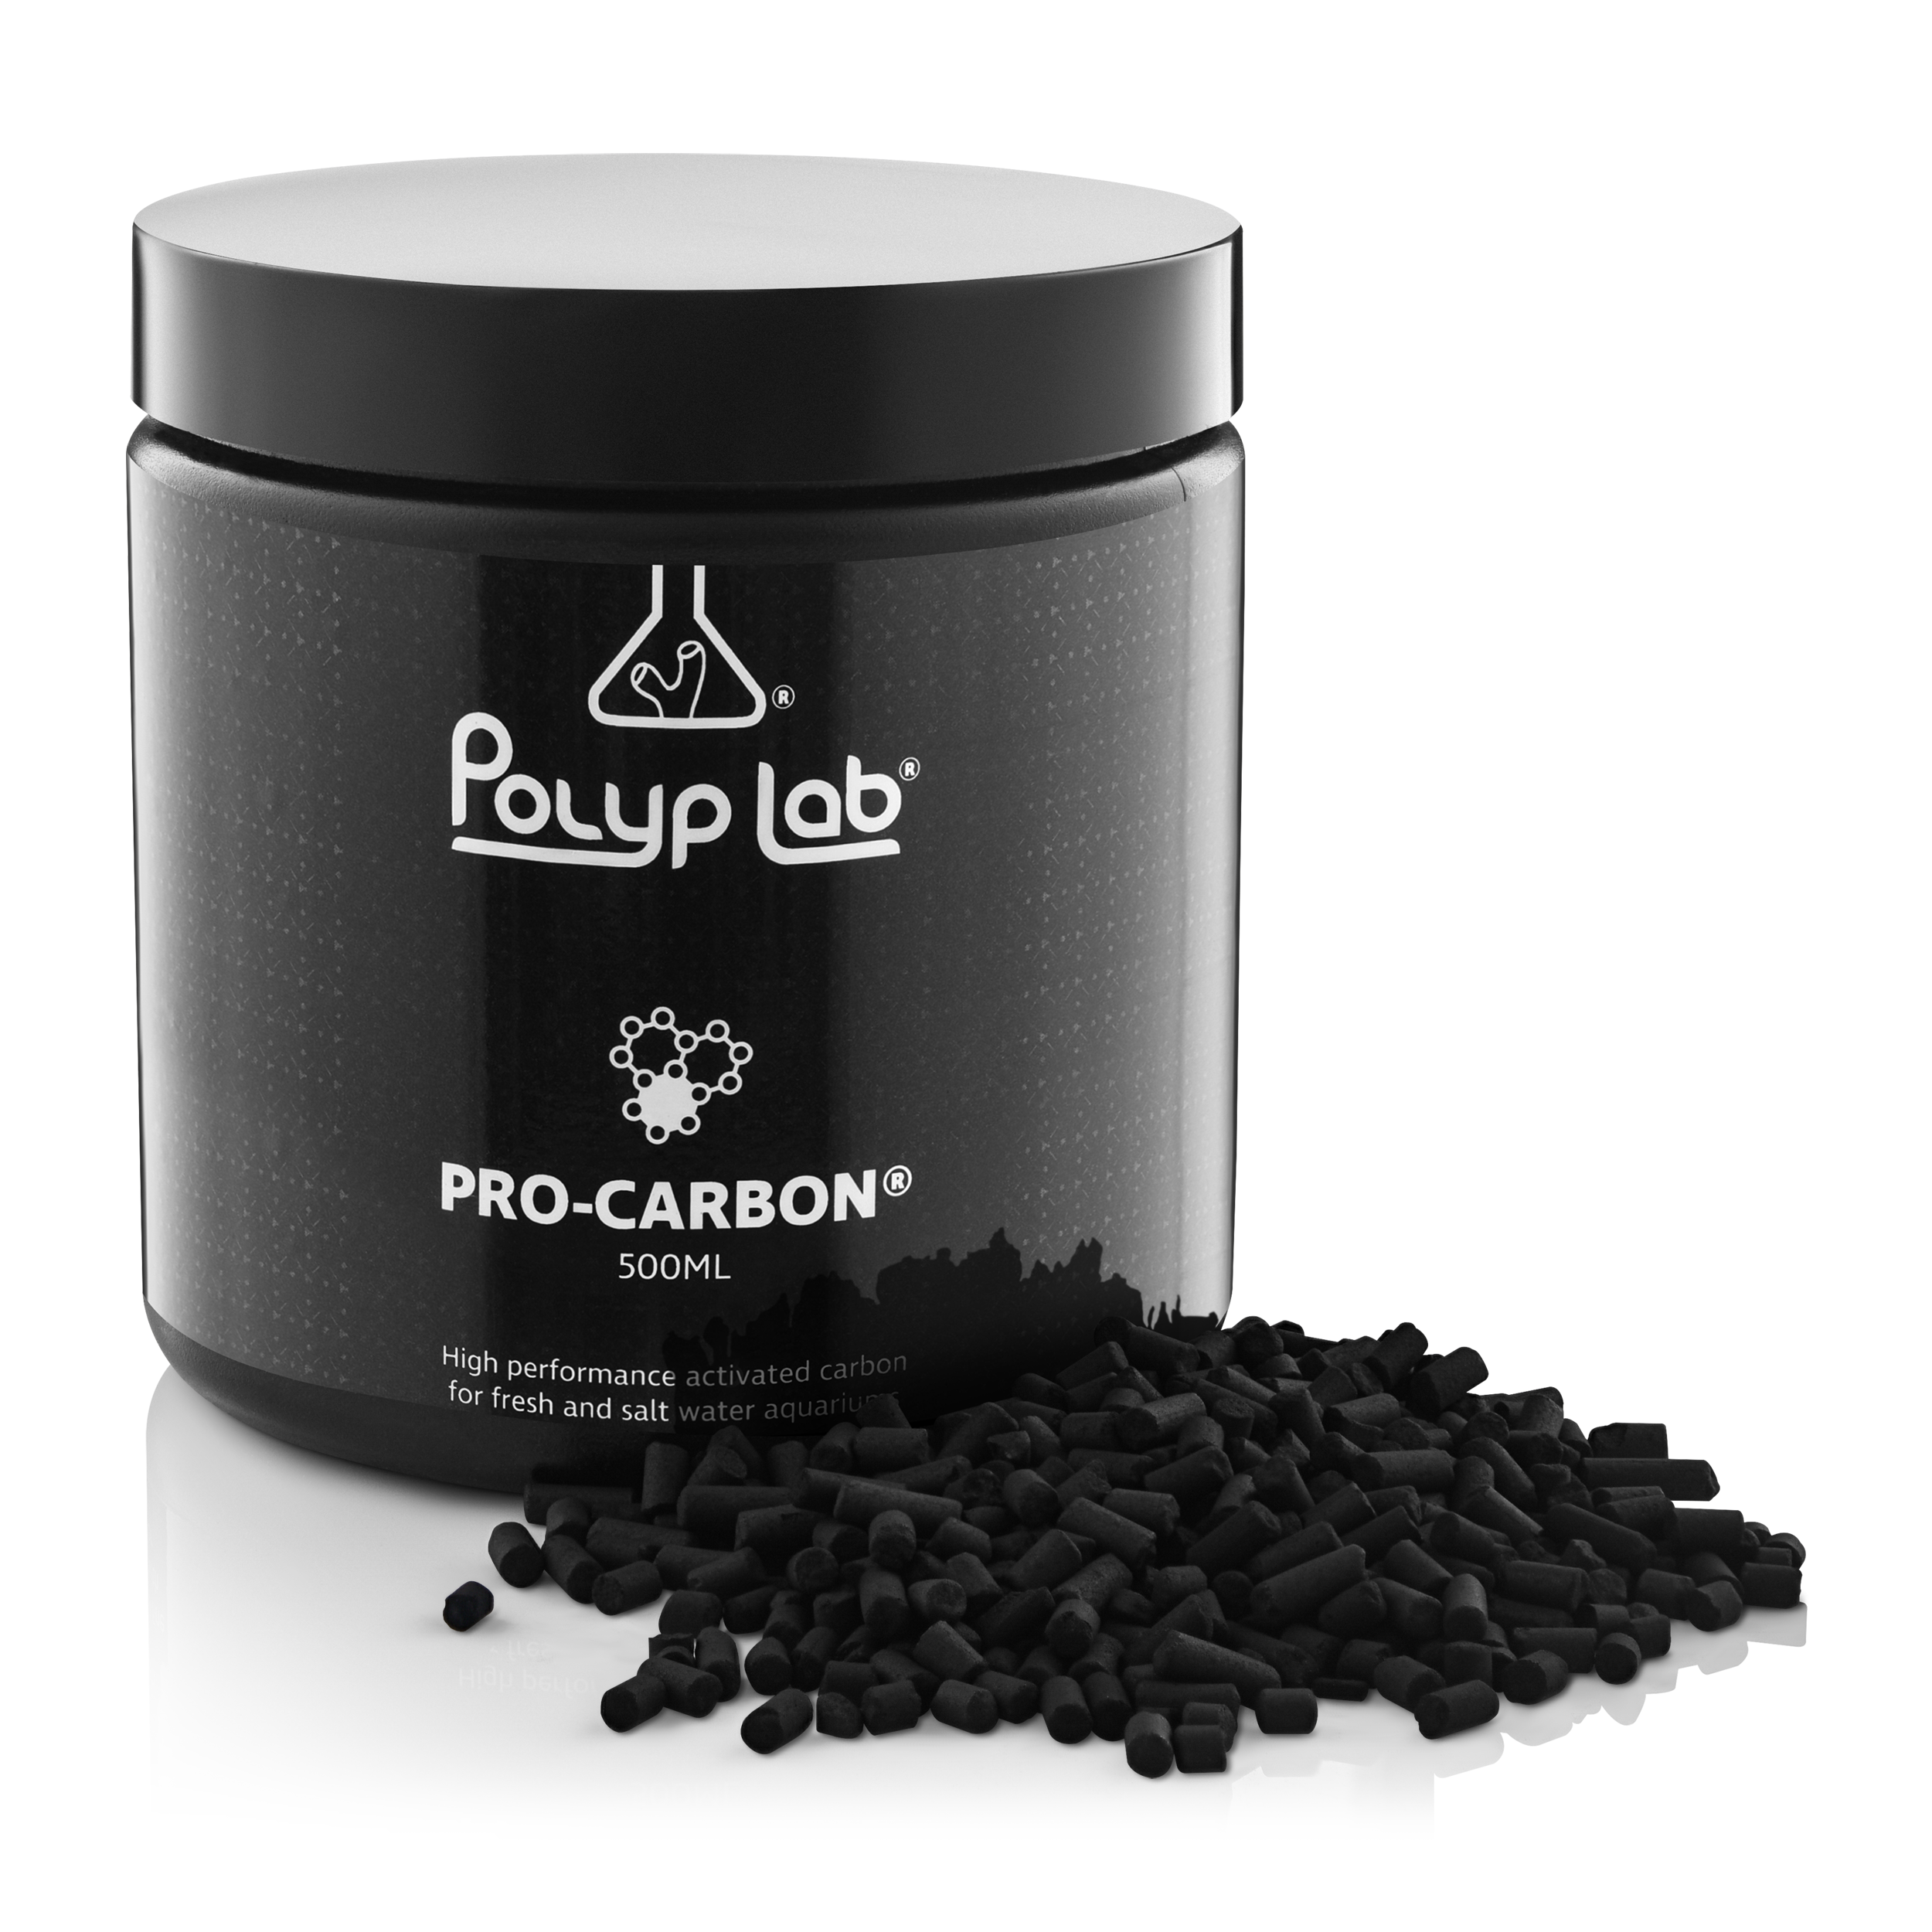 Polyplab Pro-Carbon - 1000 ml